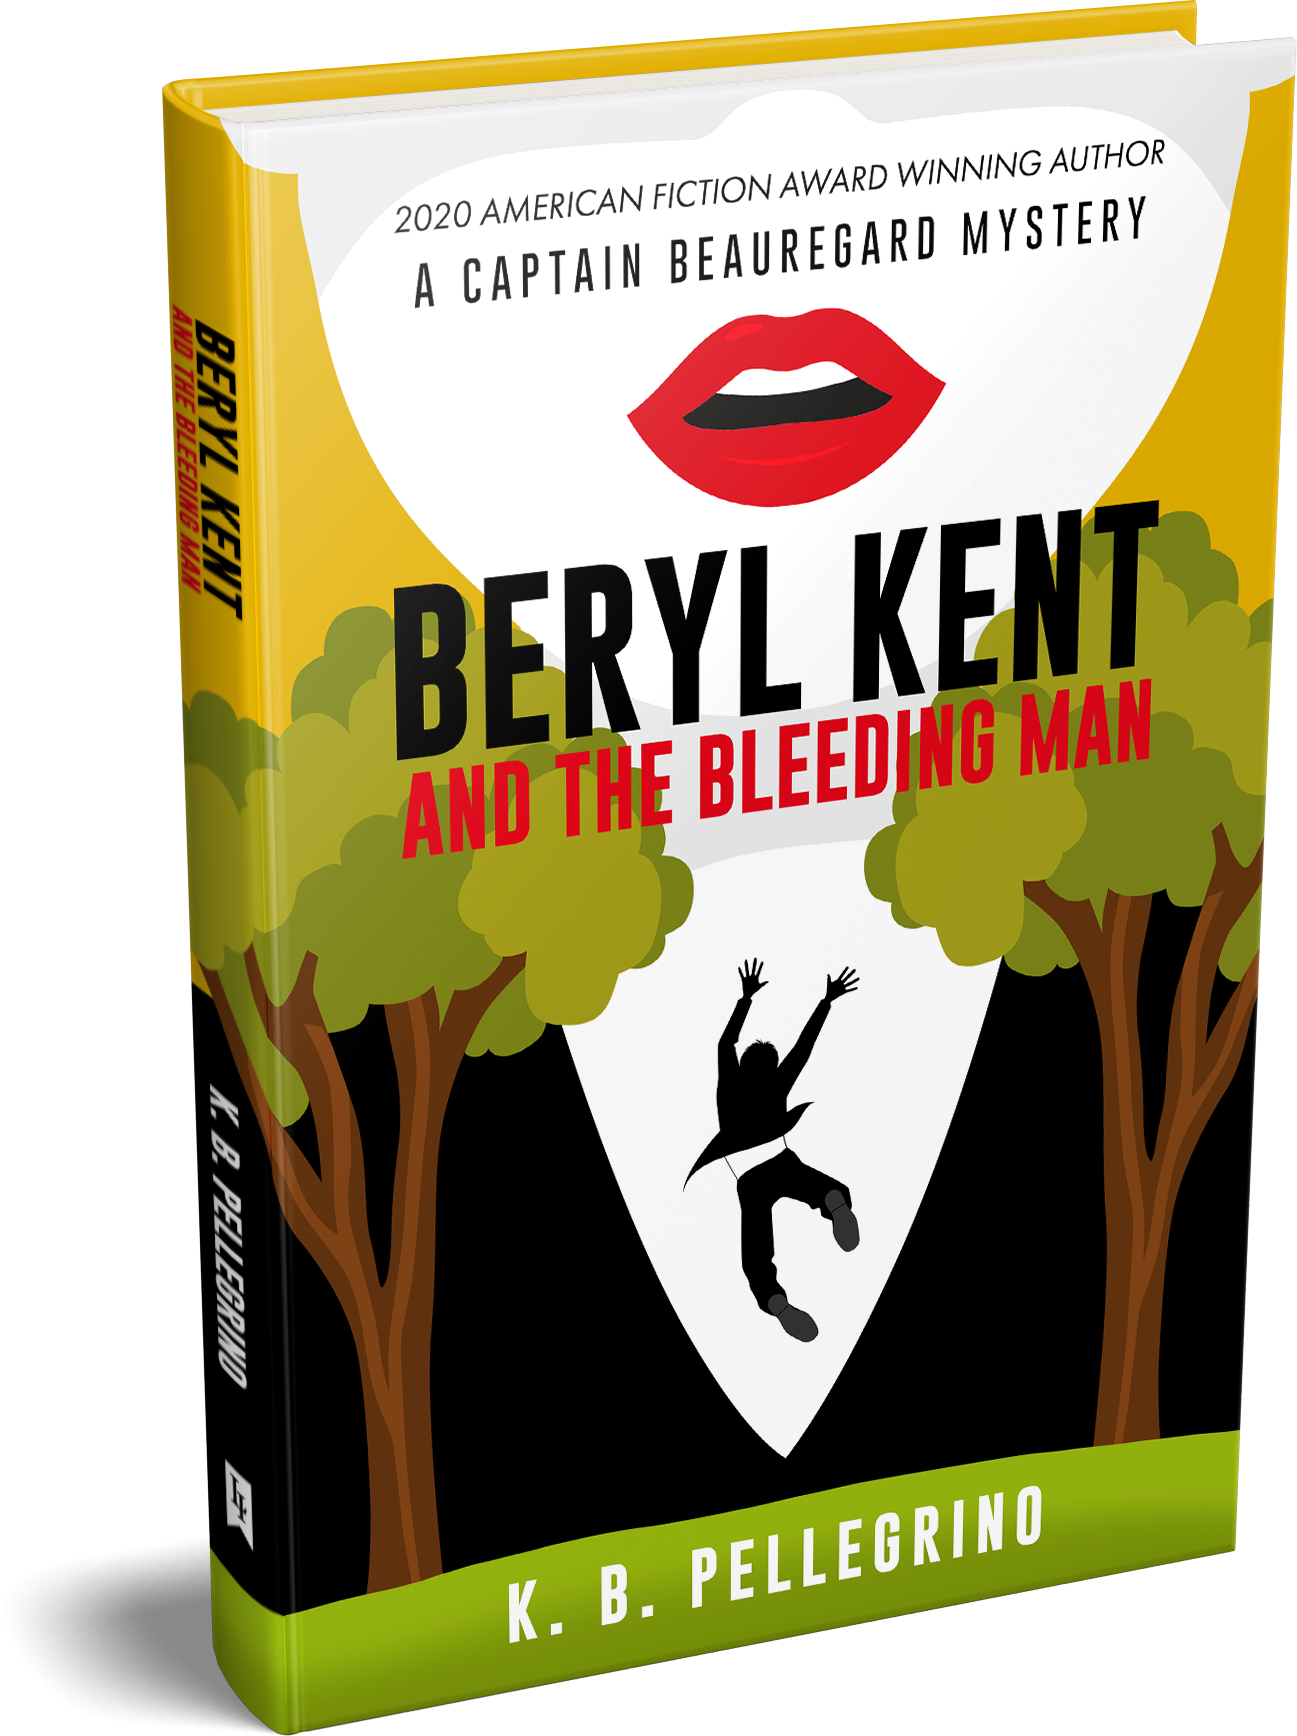 Beryl Kent and the Bleeding Man by K.B. Pellegrino